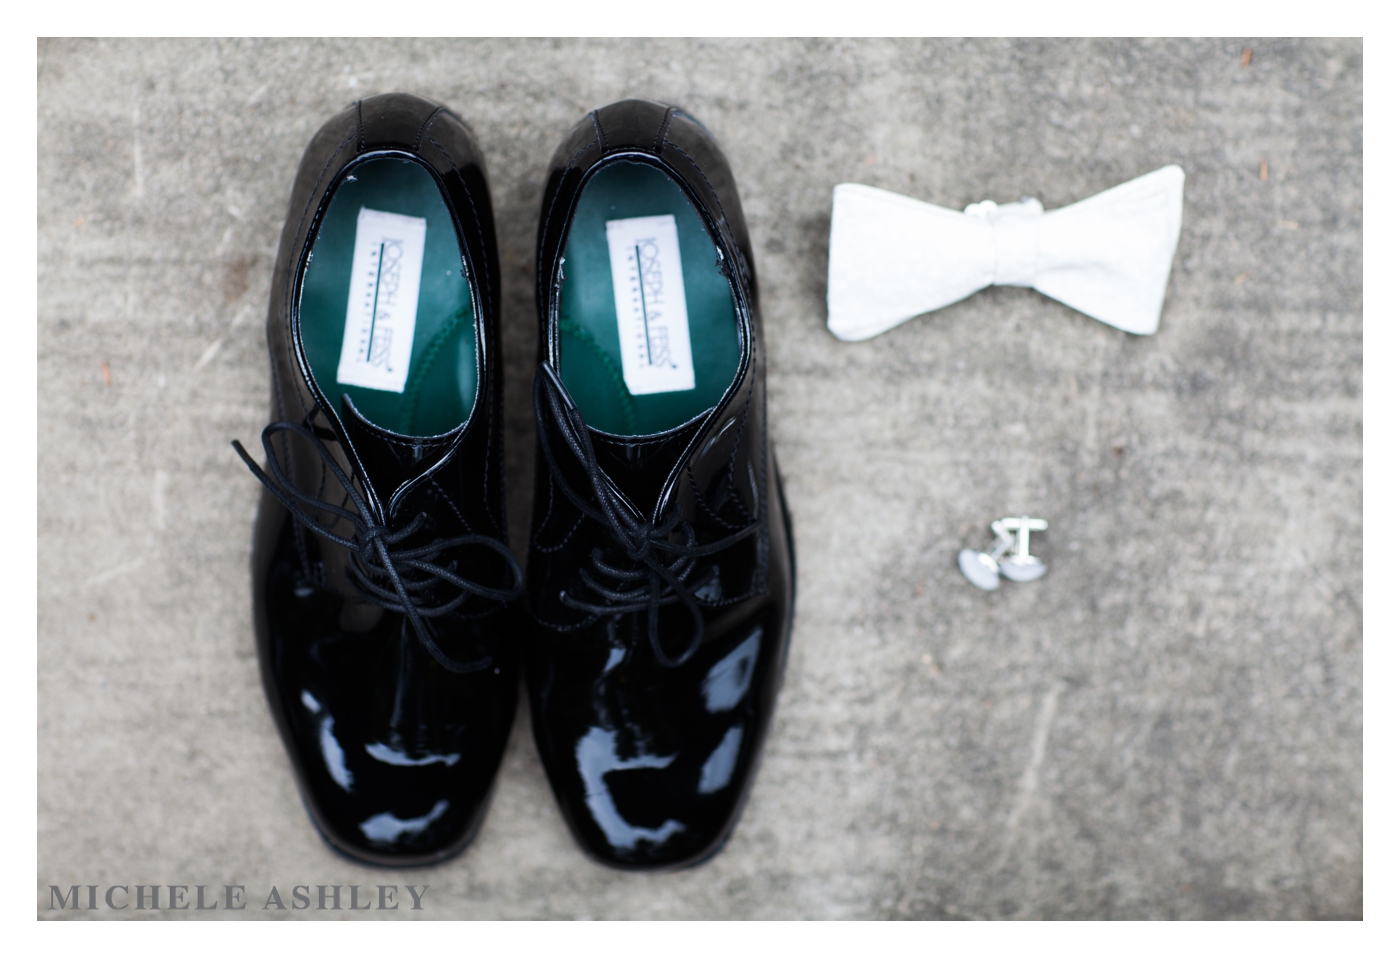 Salem Cross Inn Wedding | Katherine + Drew | Michele Ashley Photography